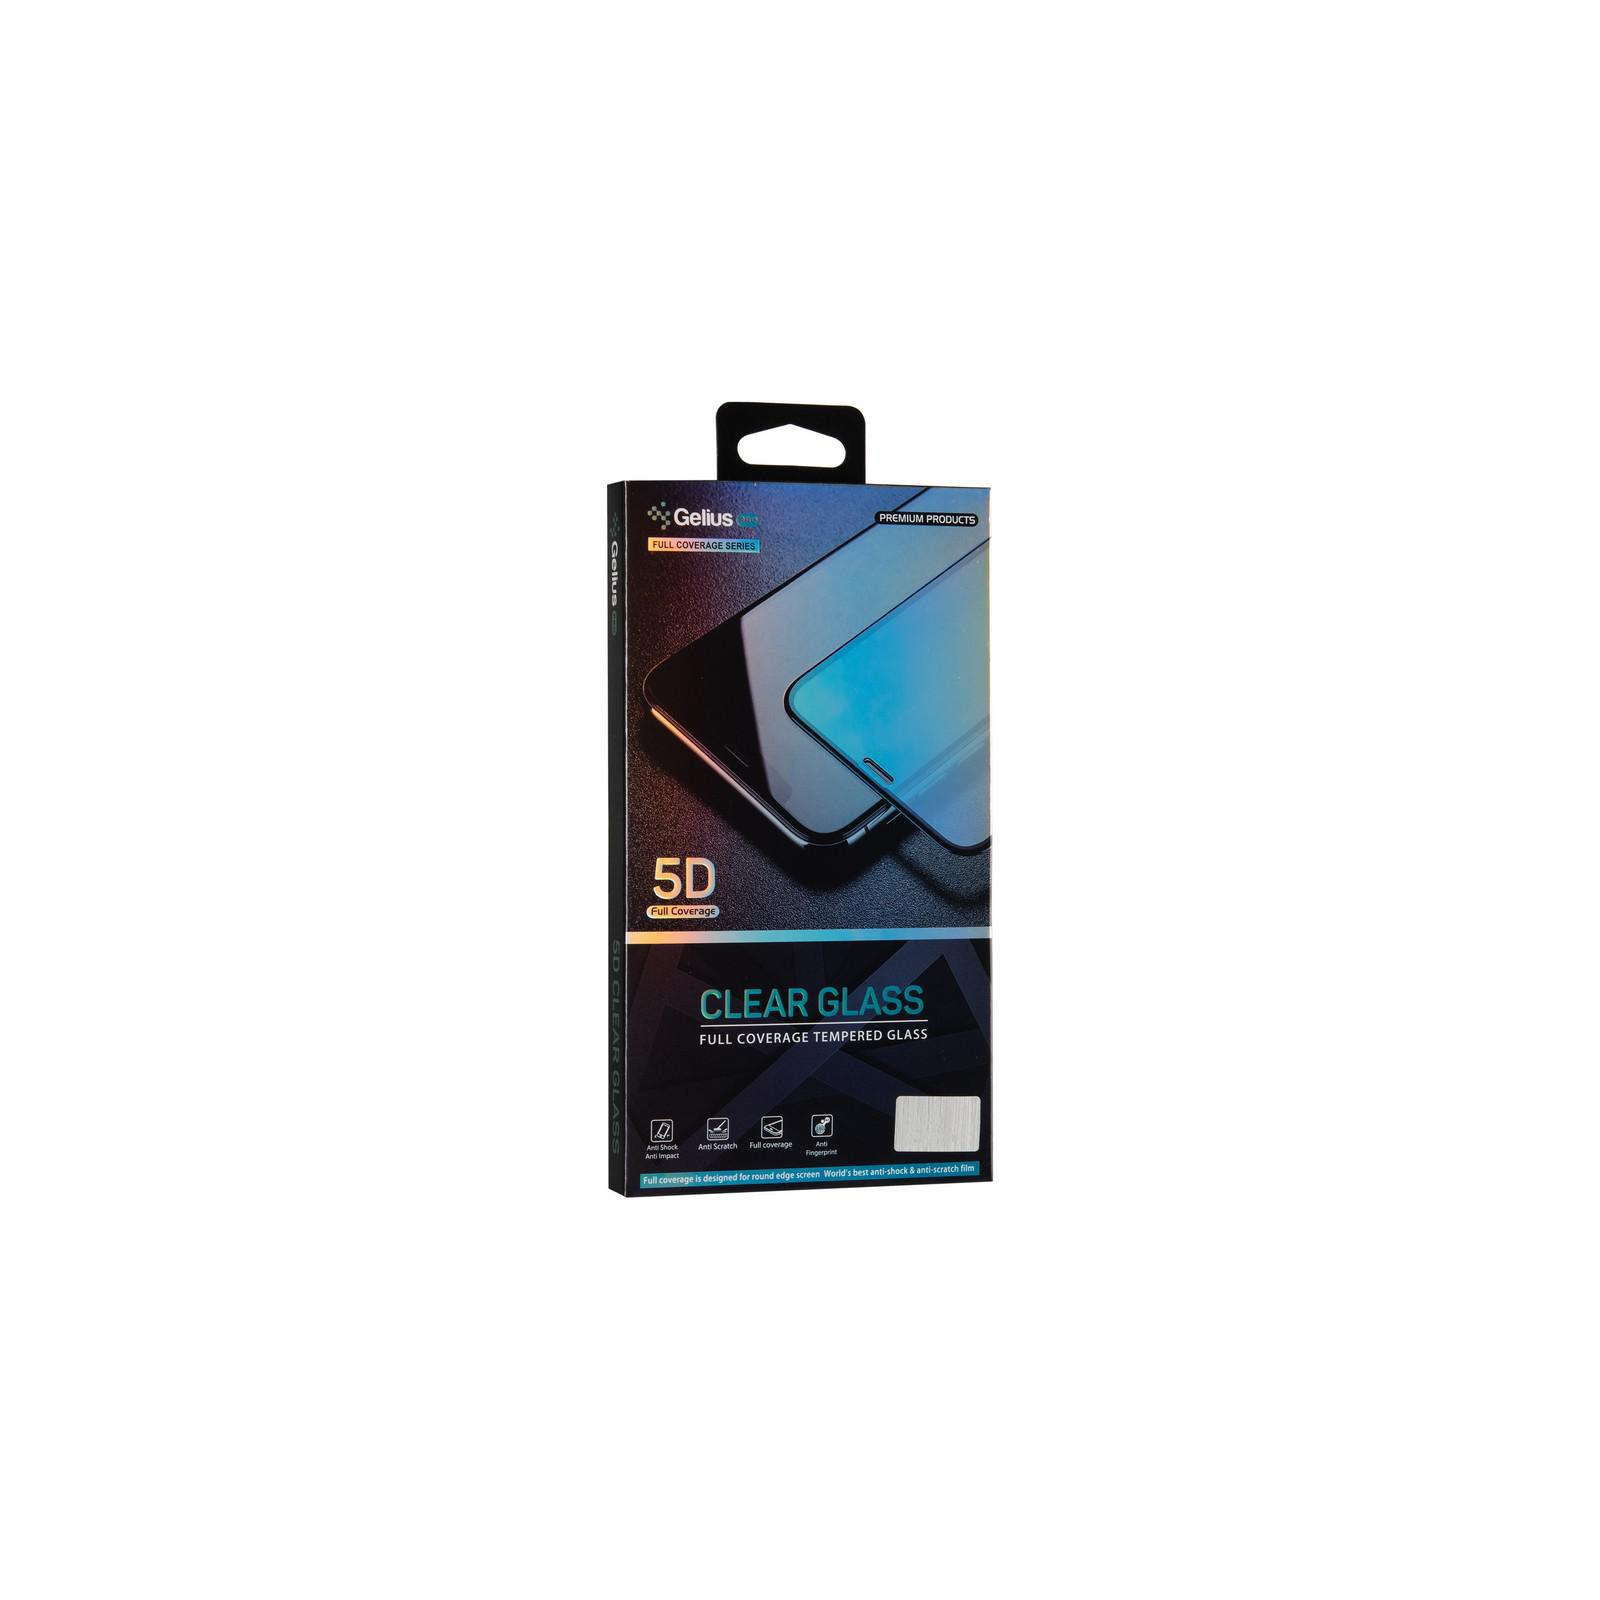 Стекло защитное Gelius Pro 5D Clear Glass for iPhone XS Max Black (00000070948) изображение 2